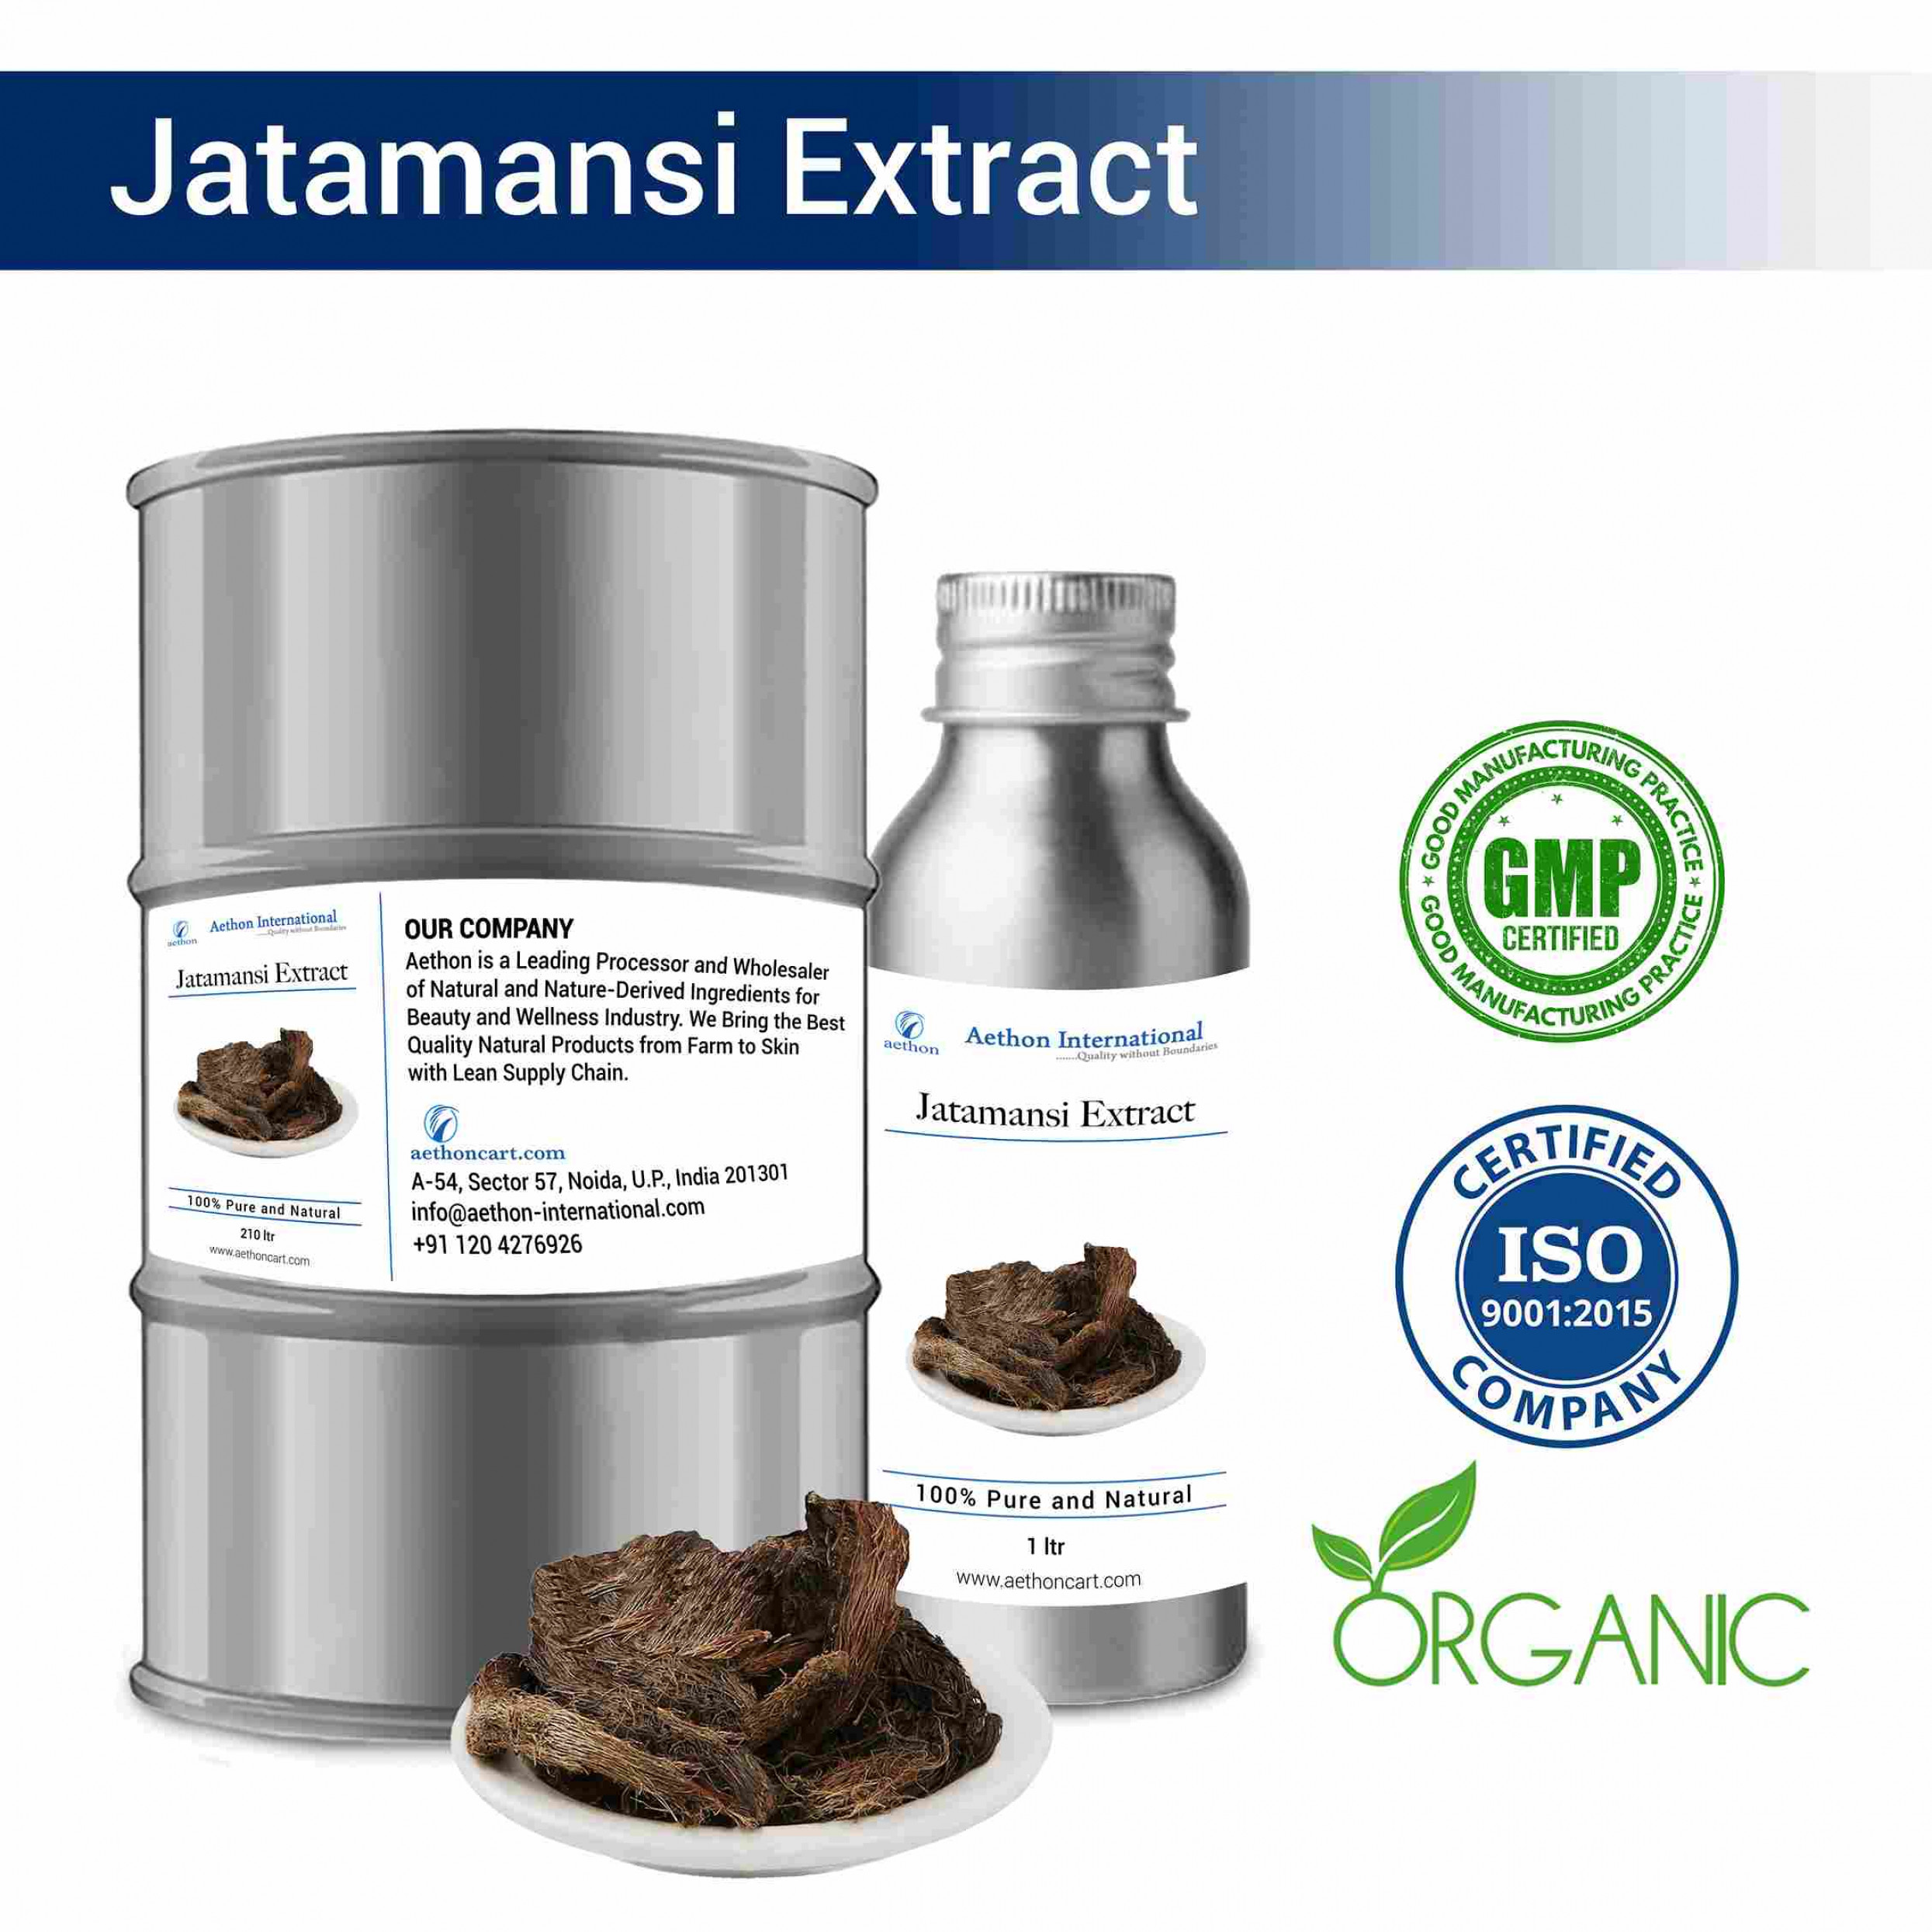 Jatamansi Extract